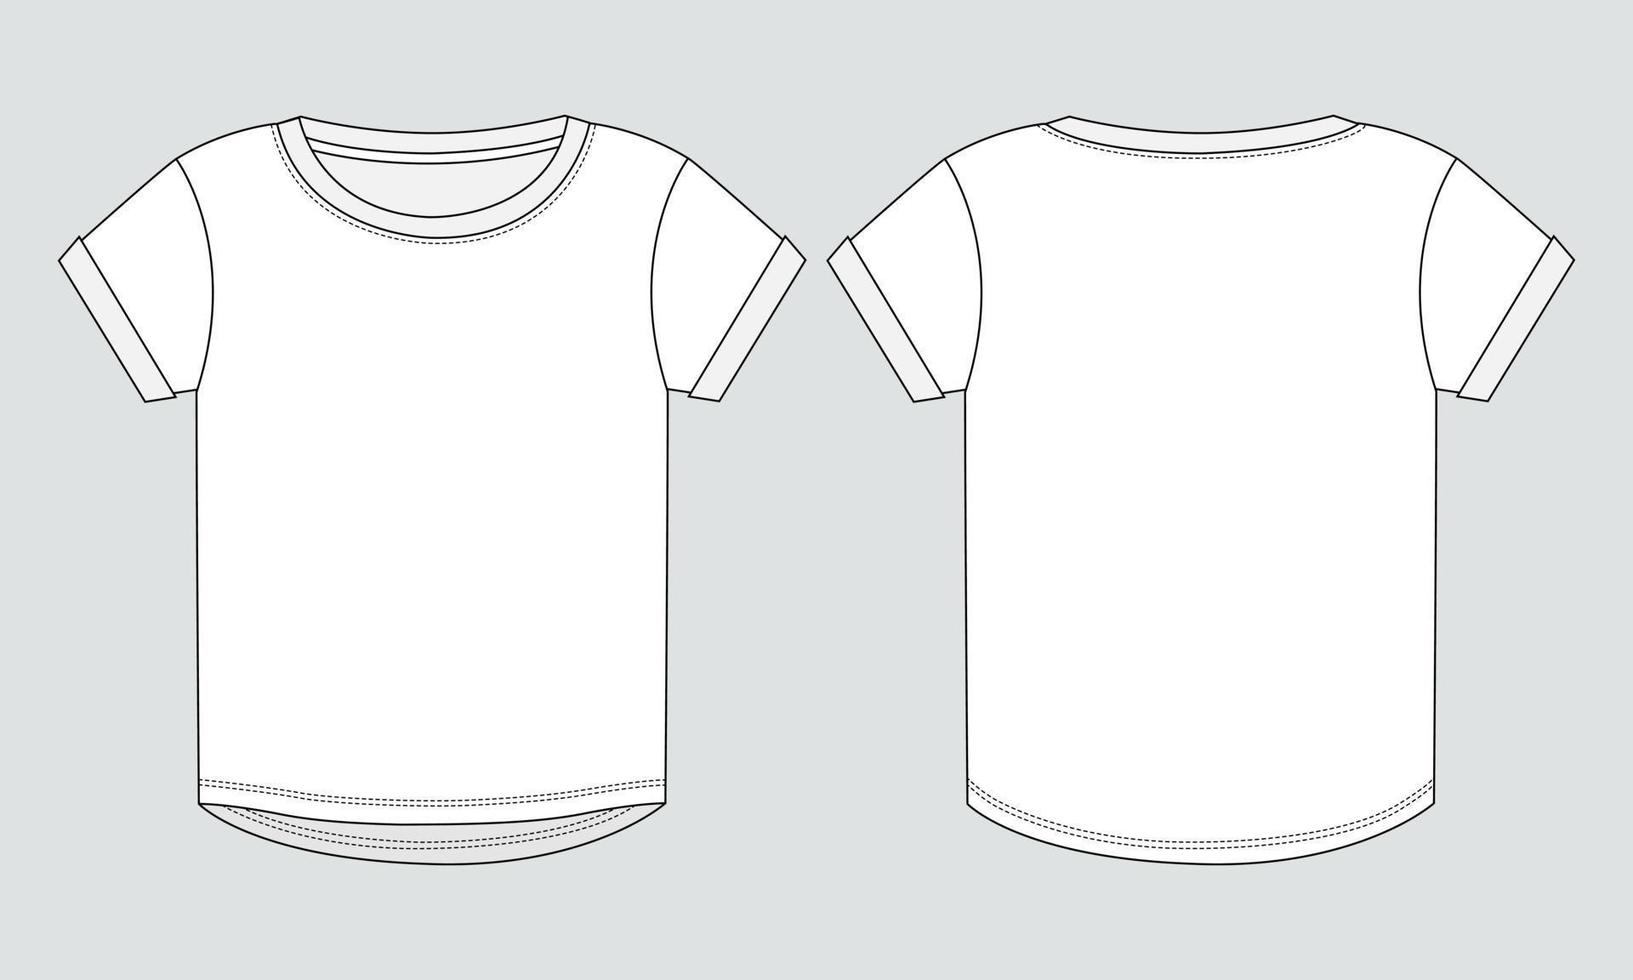 camiseta de manga corta tops plantilla de ilustración vectorial para damas vector